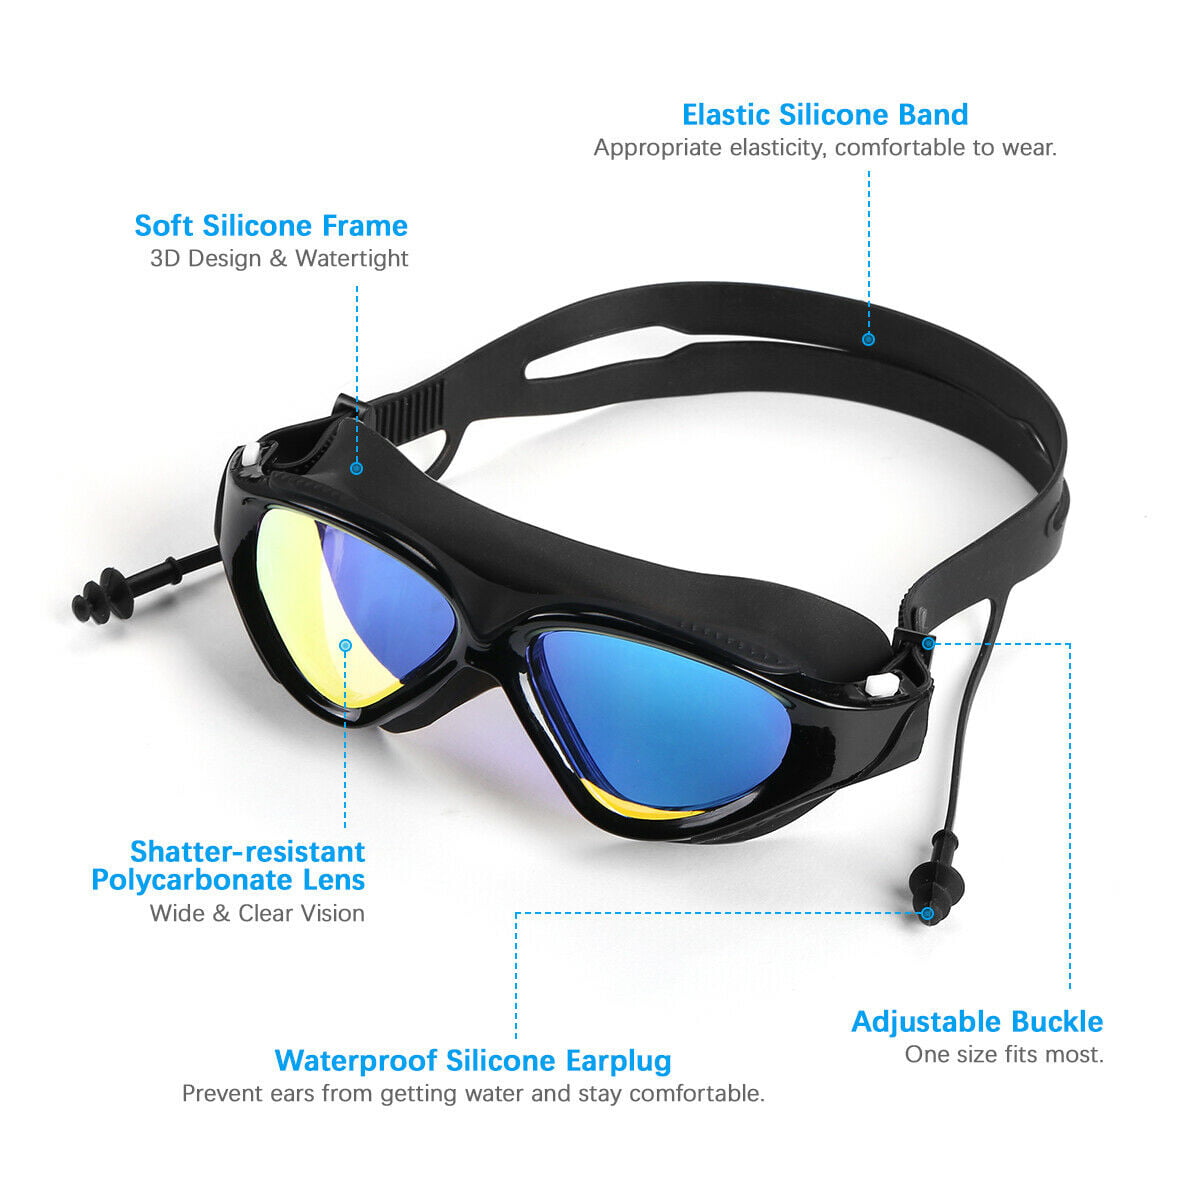 Mirror Swimming Goggles Anti-Fog Swim Glasses UV Protection with Ear Plug Adult 